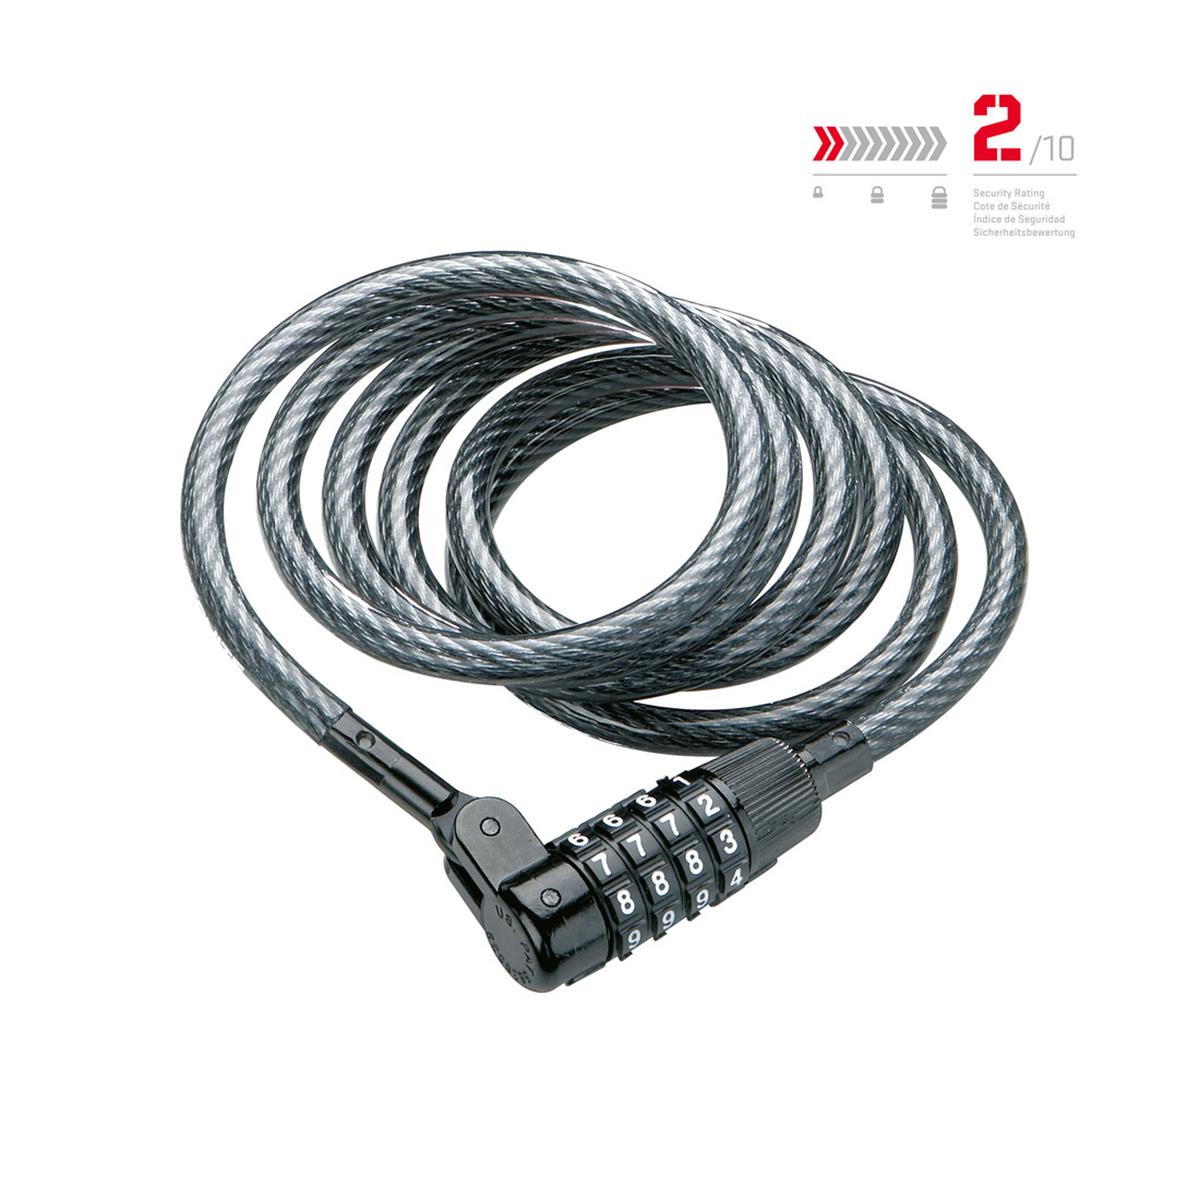 Kryptonite Cable Lock Krypto Flex 815 Combo Cable, 150 cm